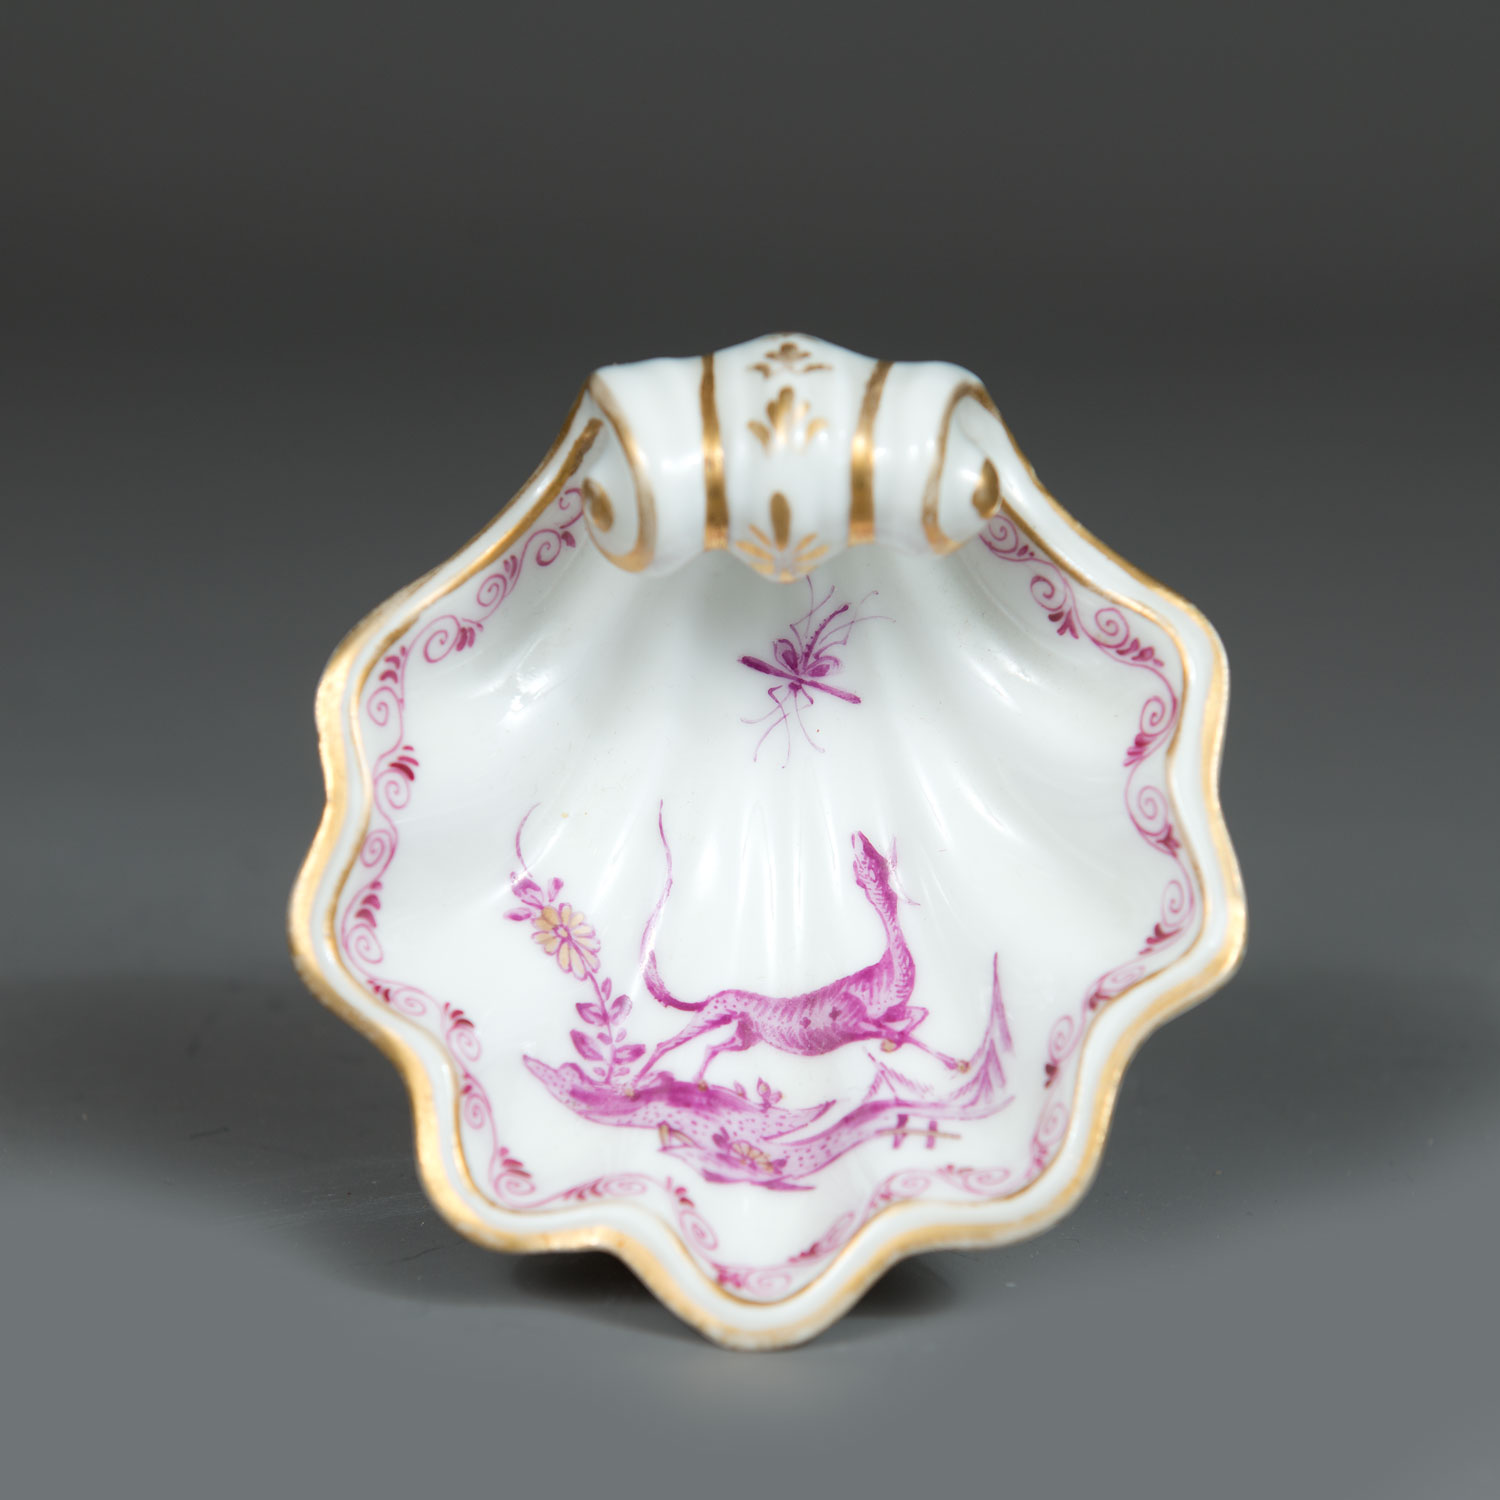 Vienna Porcelain - Image 2 of 3